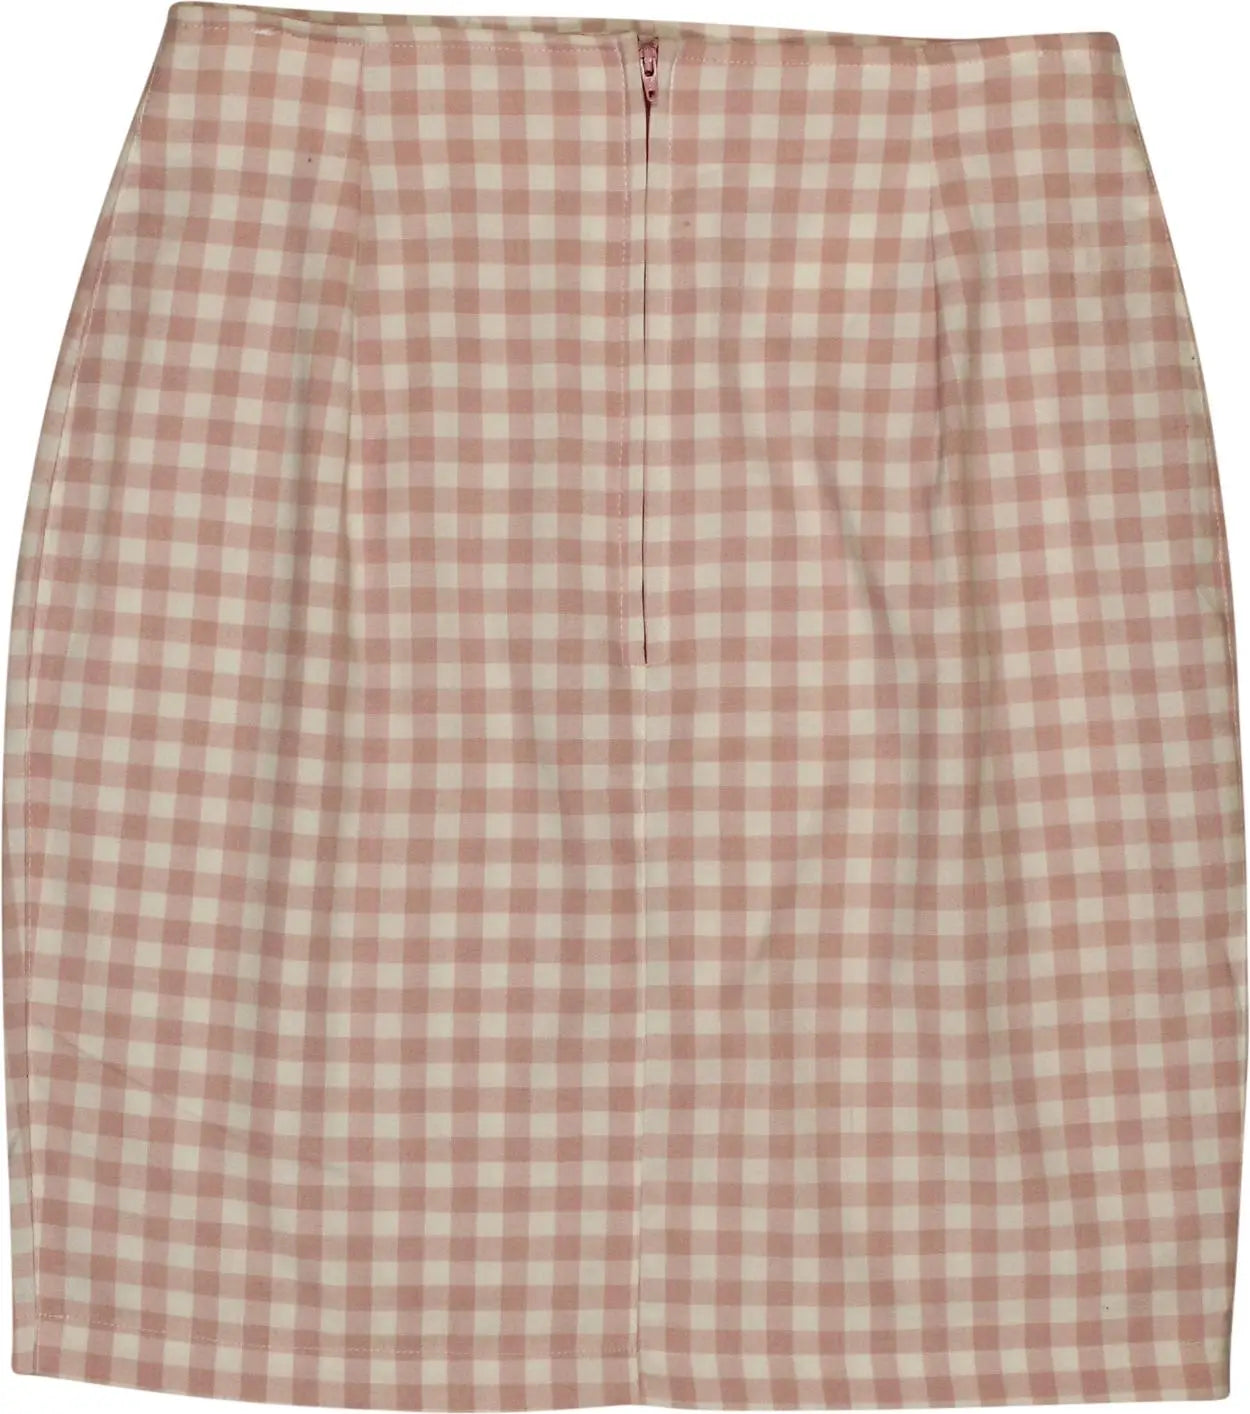 Bandolera - Gingham Skirt- ThriftTale.com - Vintage and second handclothing